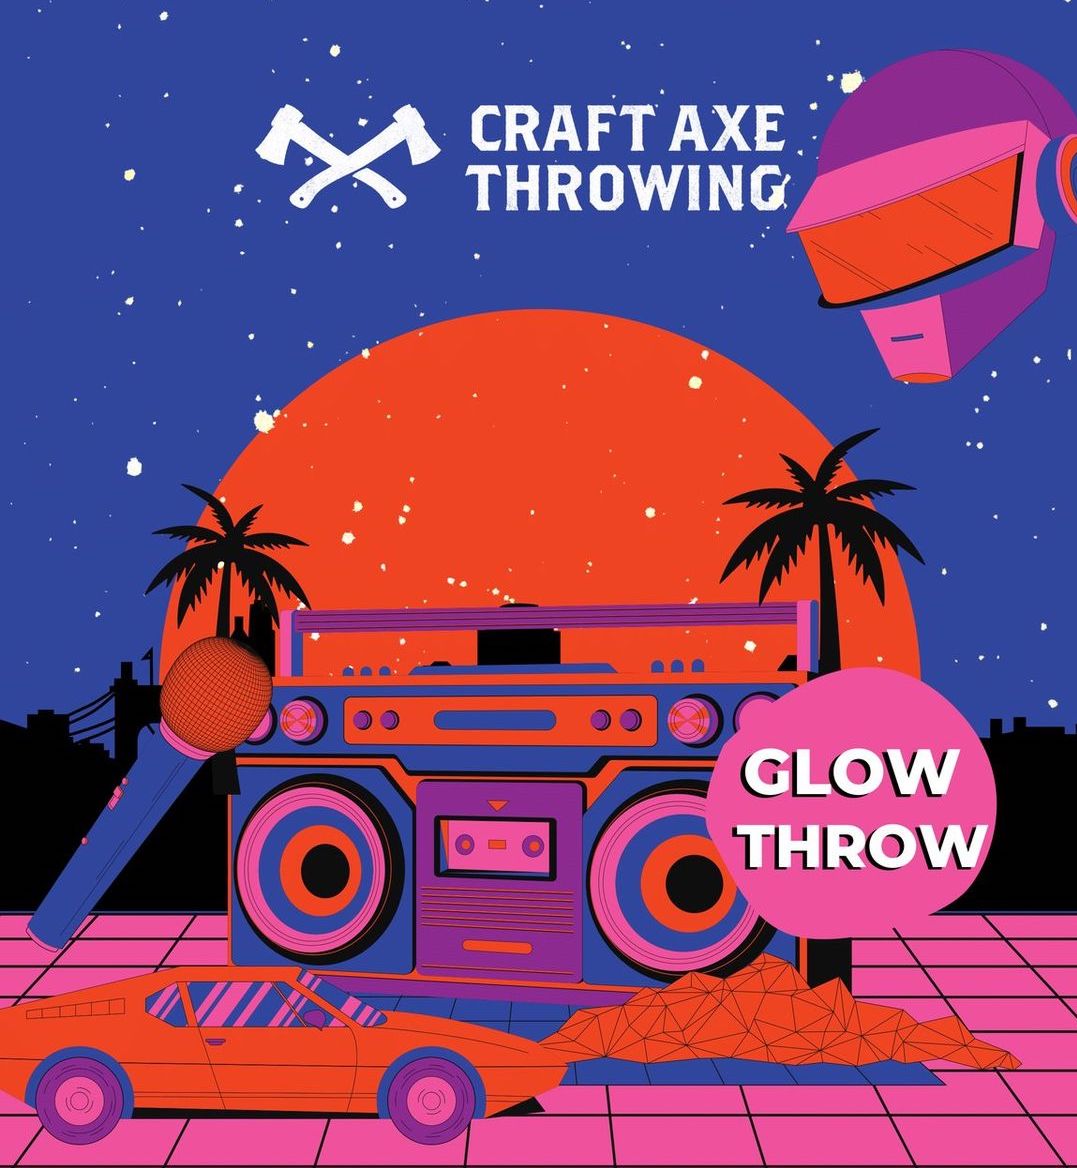 Glow Throw at Craft Axe Throwing